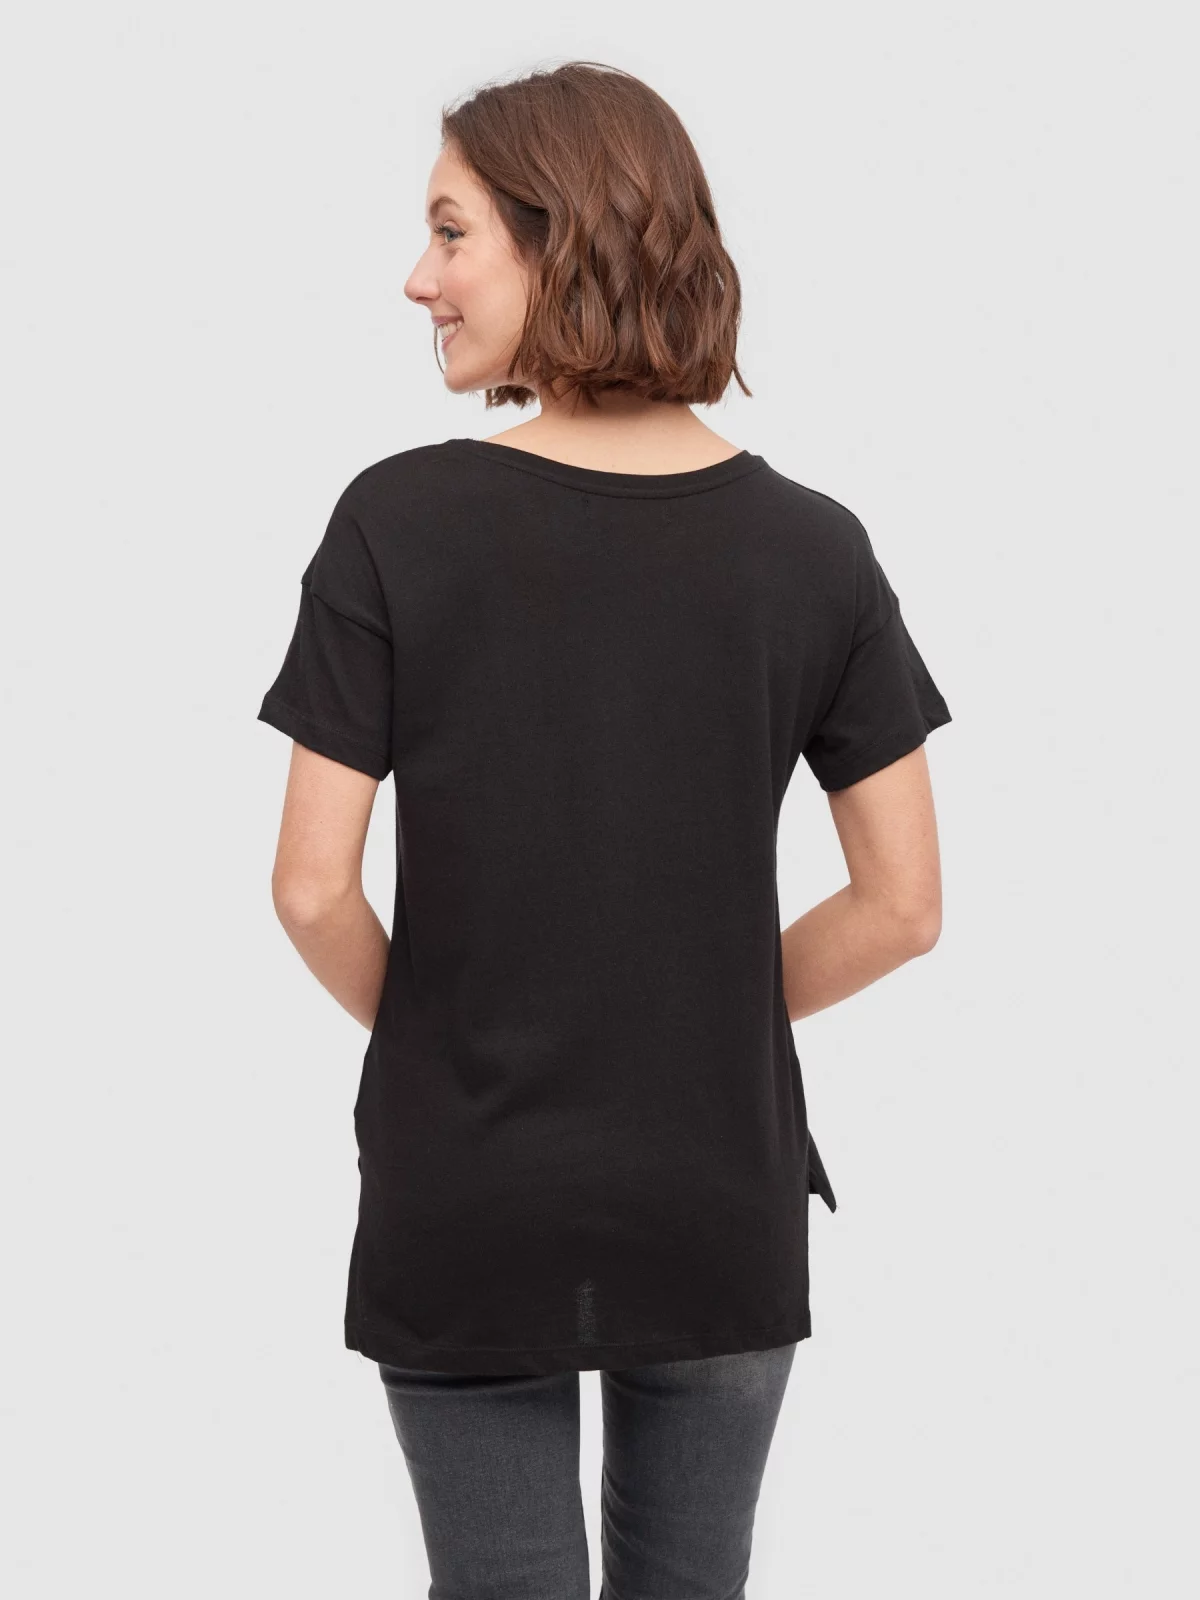 Camiseta Don´t Forget negro vista media trasera